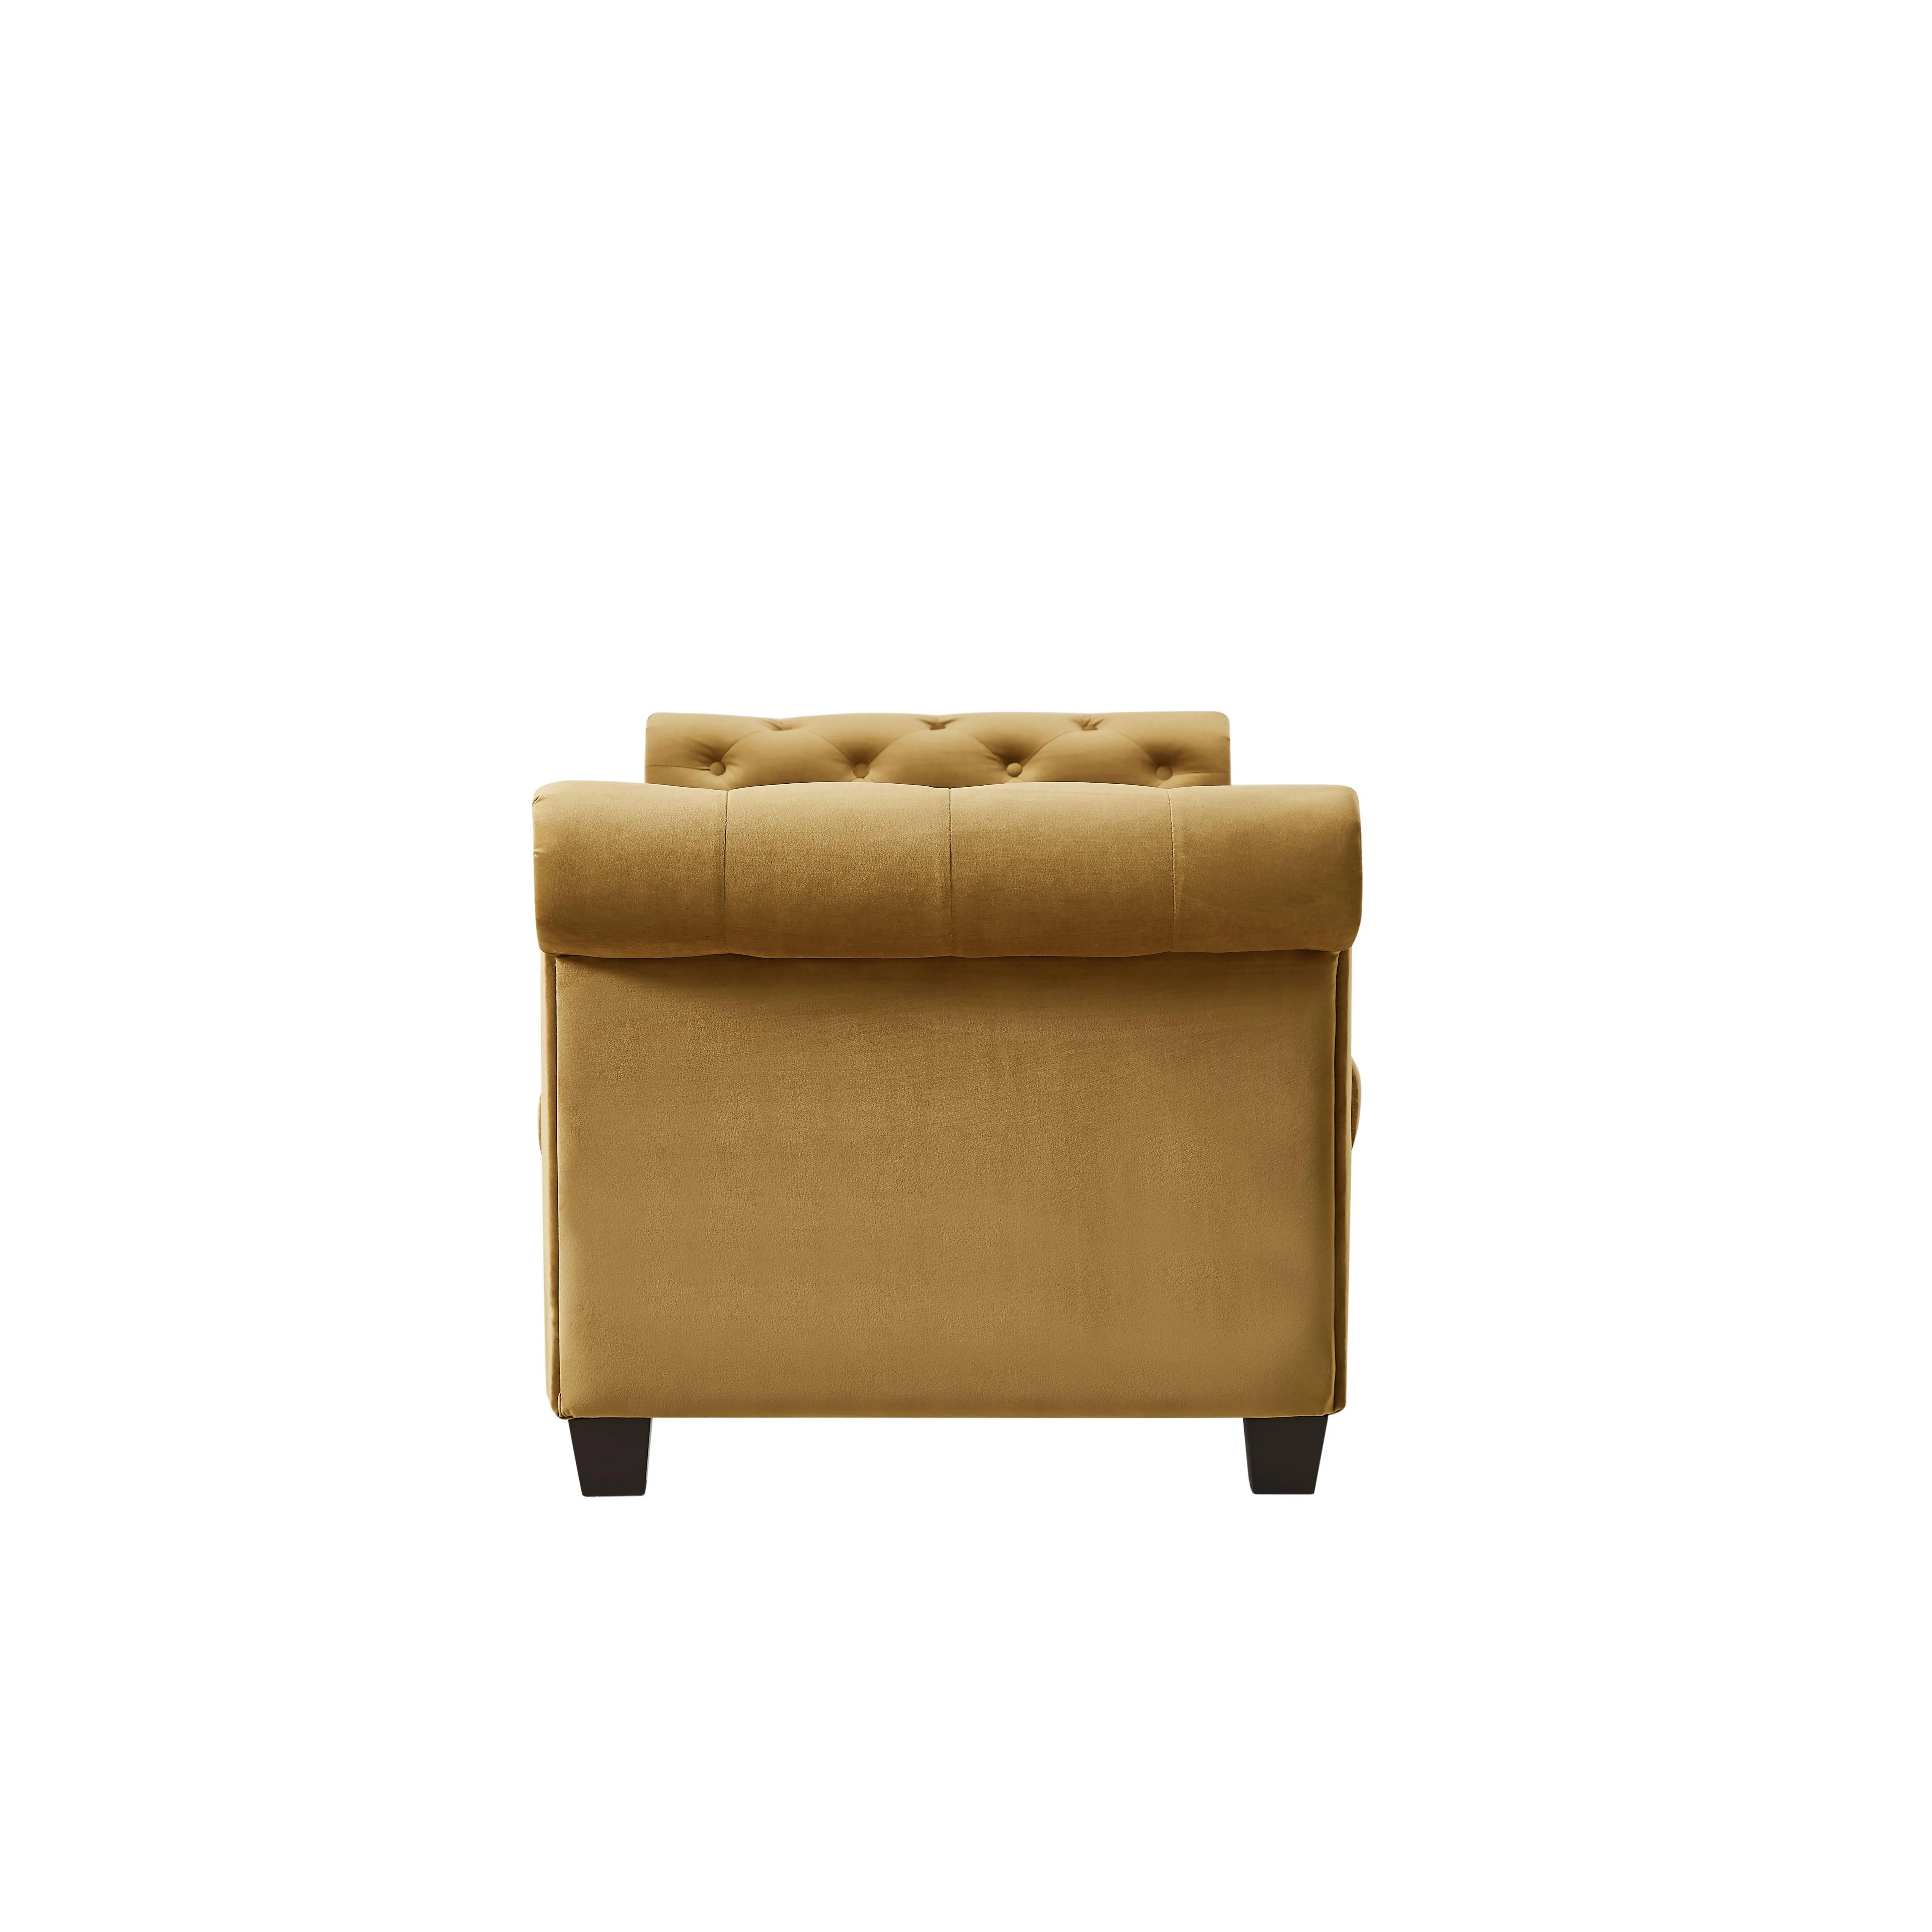 rectangular large sofa stool,brown